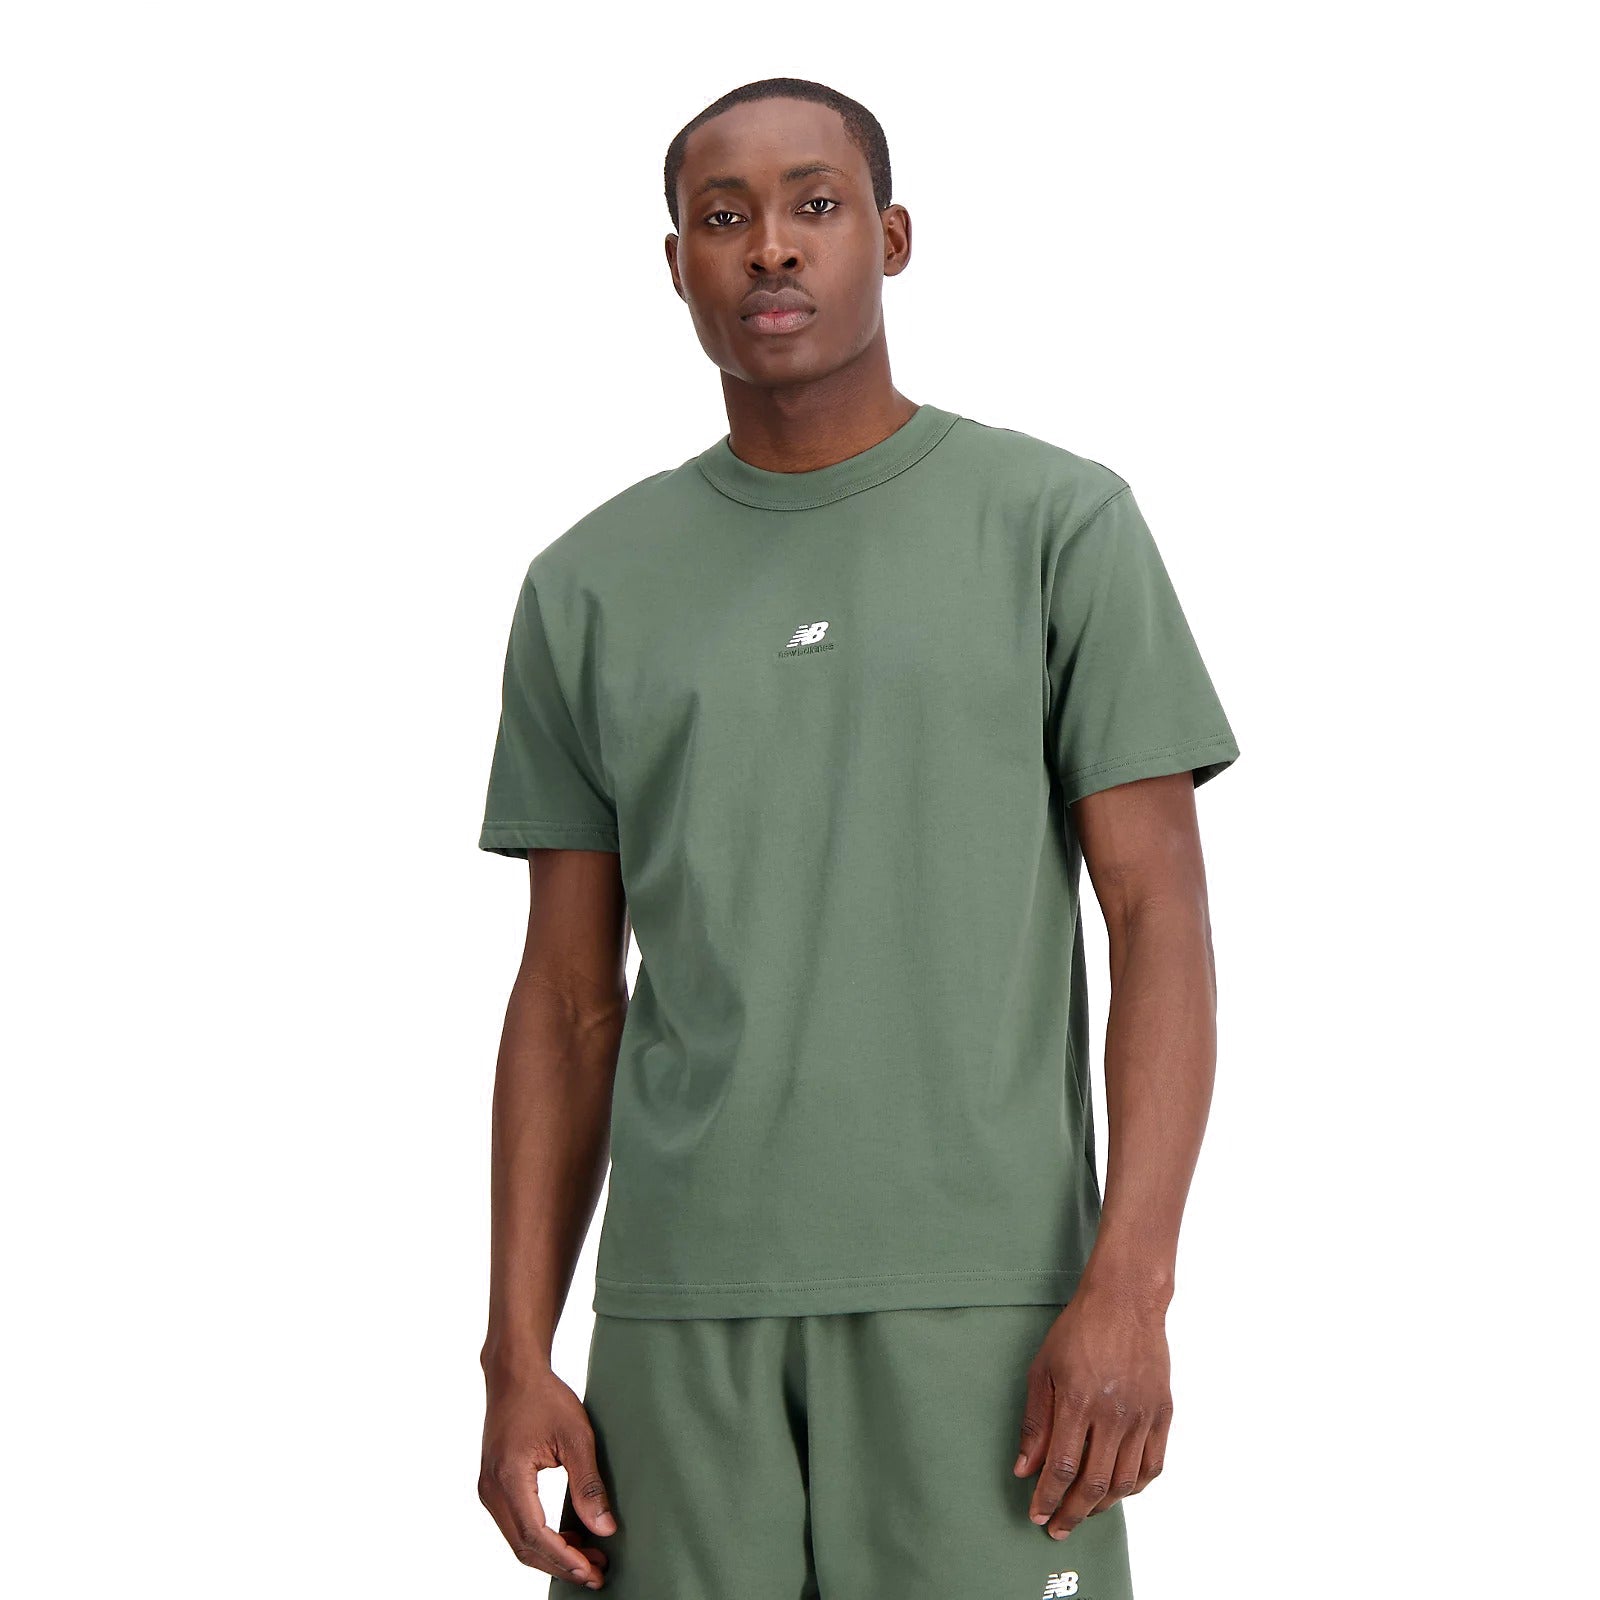 New Balance Men Sport Essentials Premium Cotton T-Shirt Deep Olive MT31504-DON - T-SHIRTS - Canada